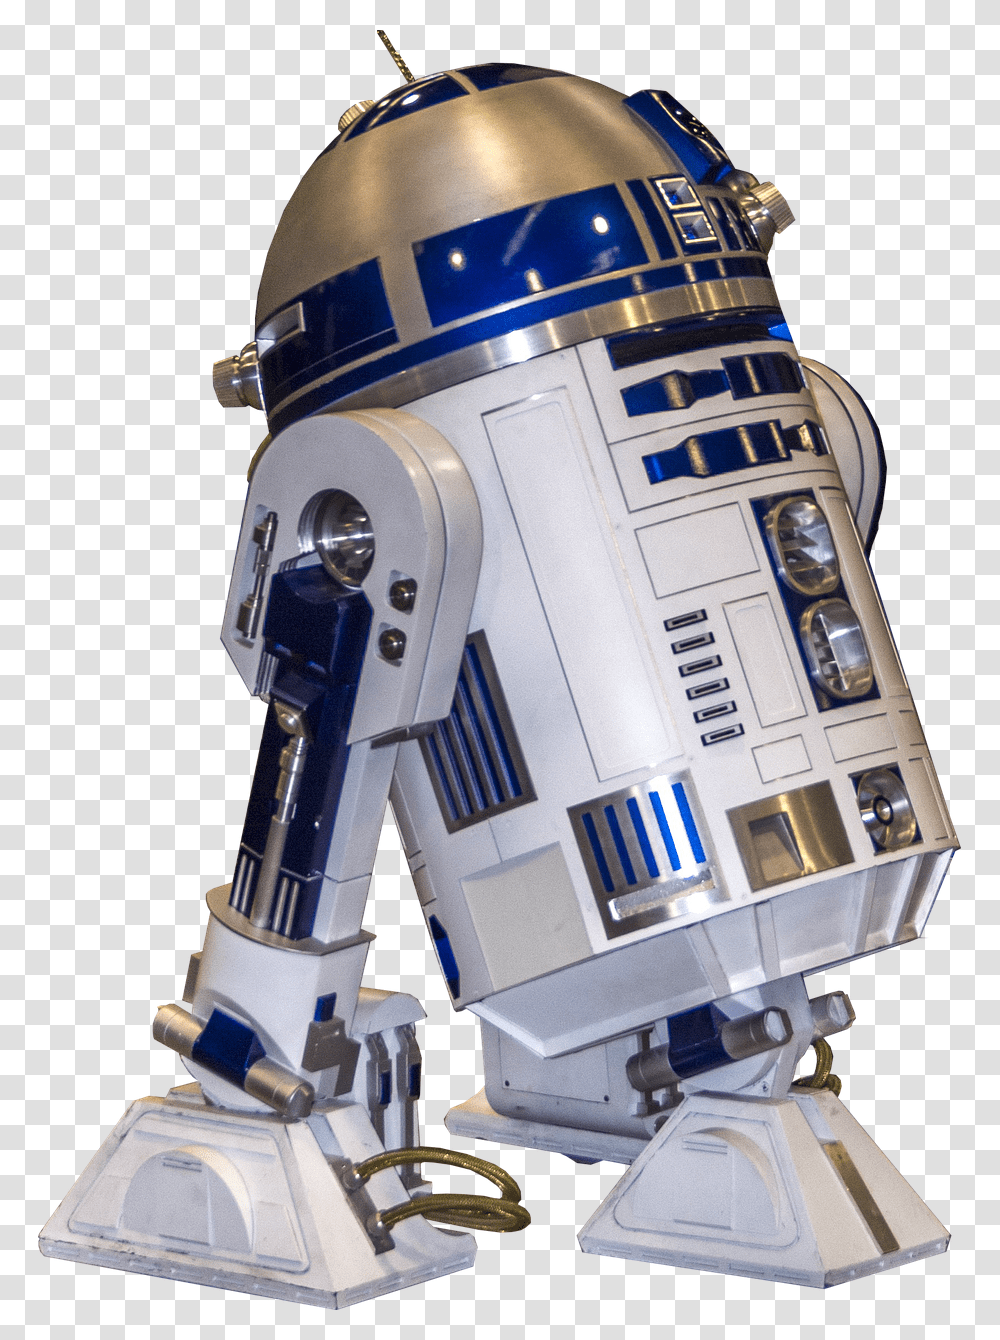 R2d2 C3po R2d2 Star Wars, Toy, Robot, Helmet Transparent Png